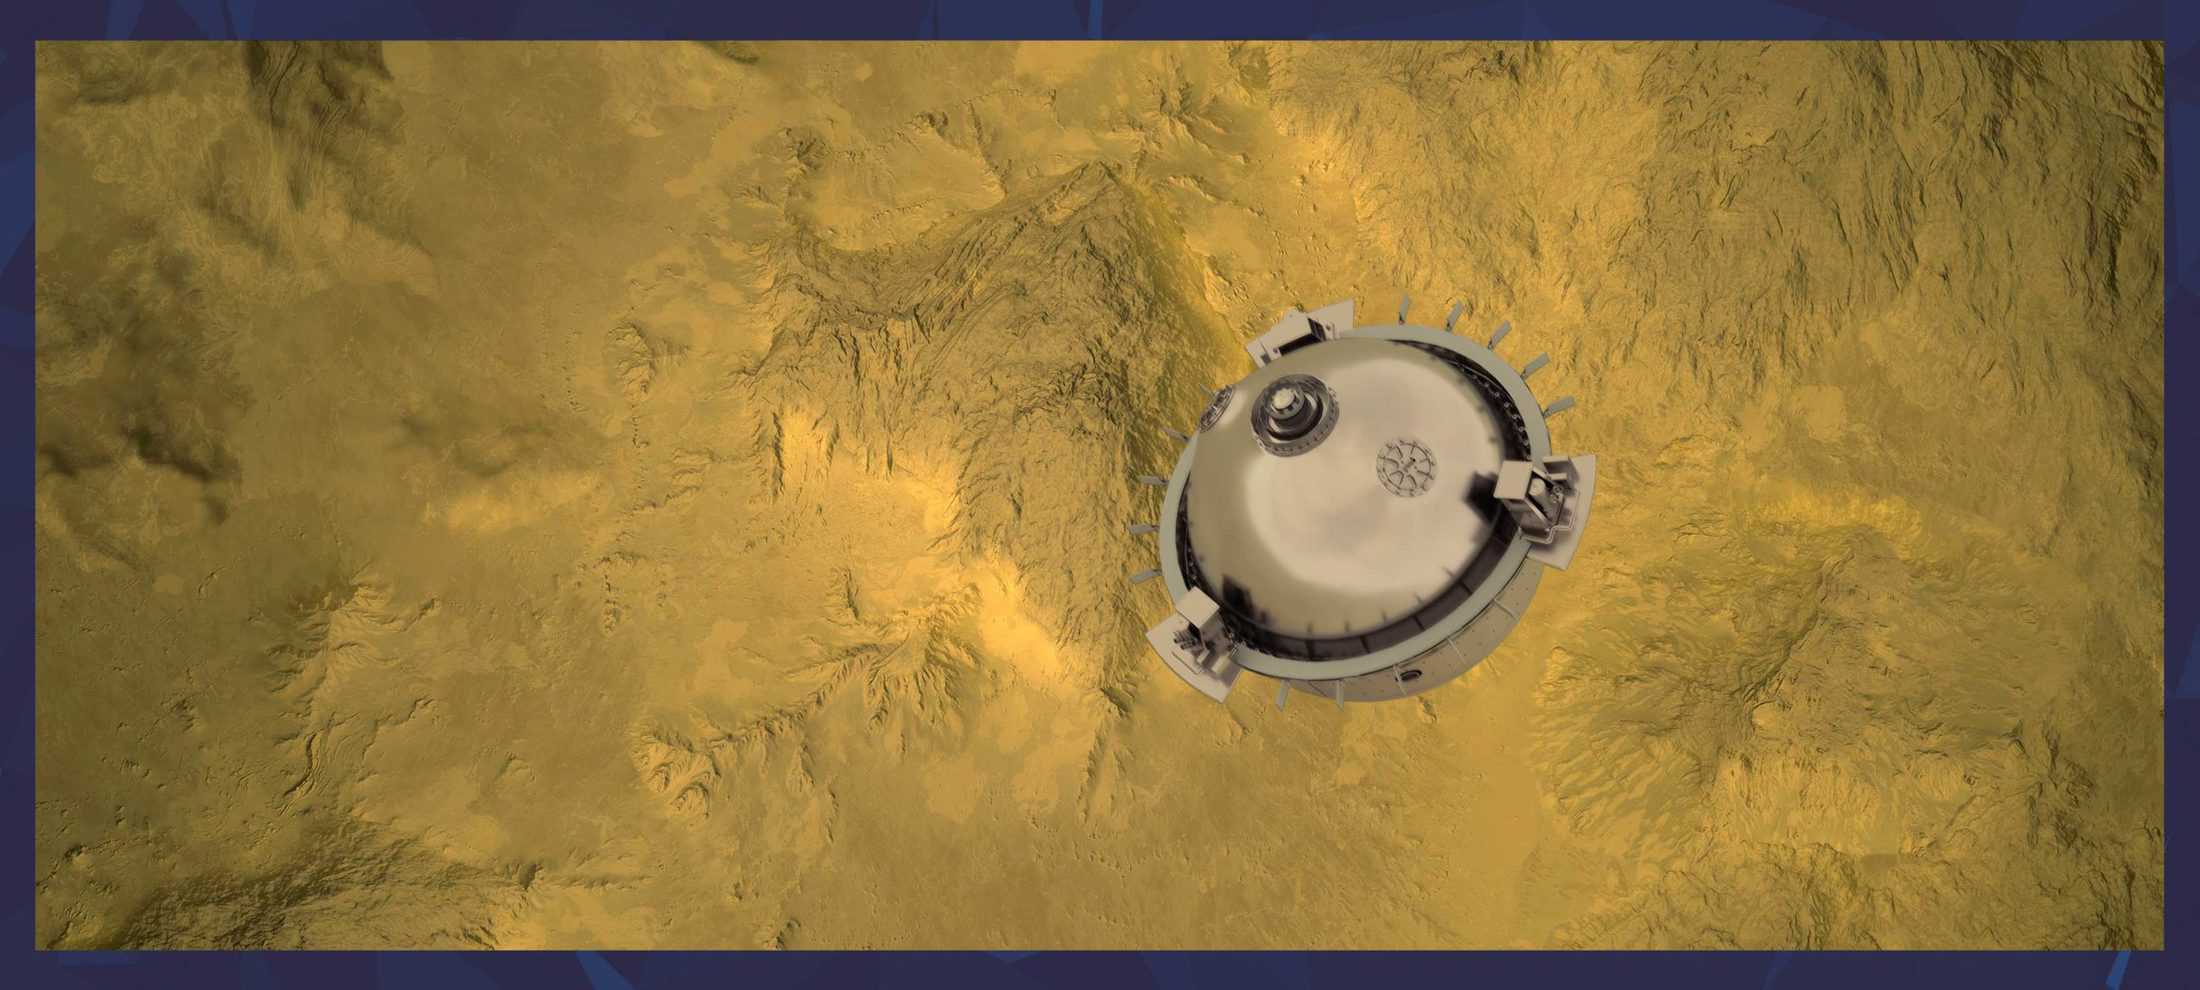 DAVINCI probe. Photo credit: NASA/GSFC